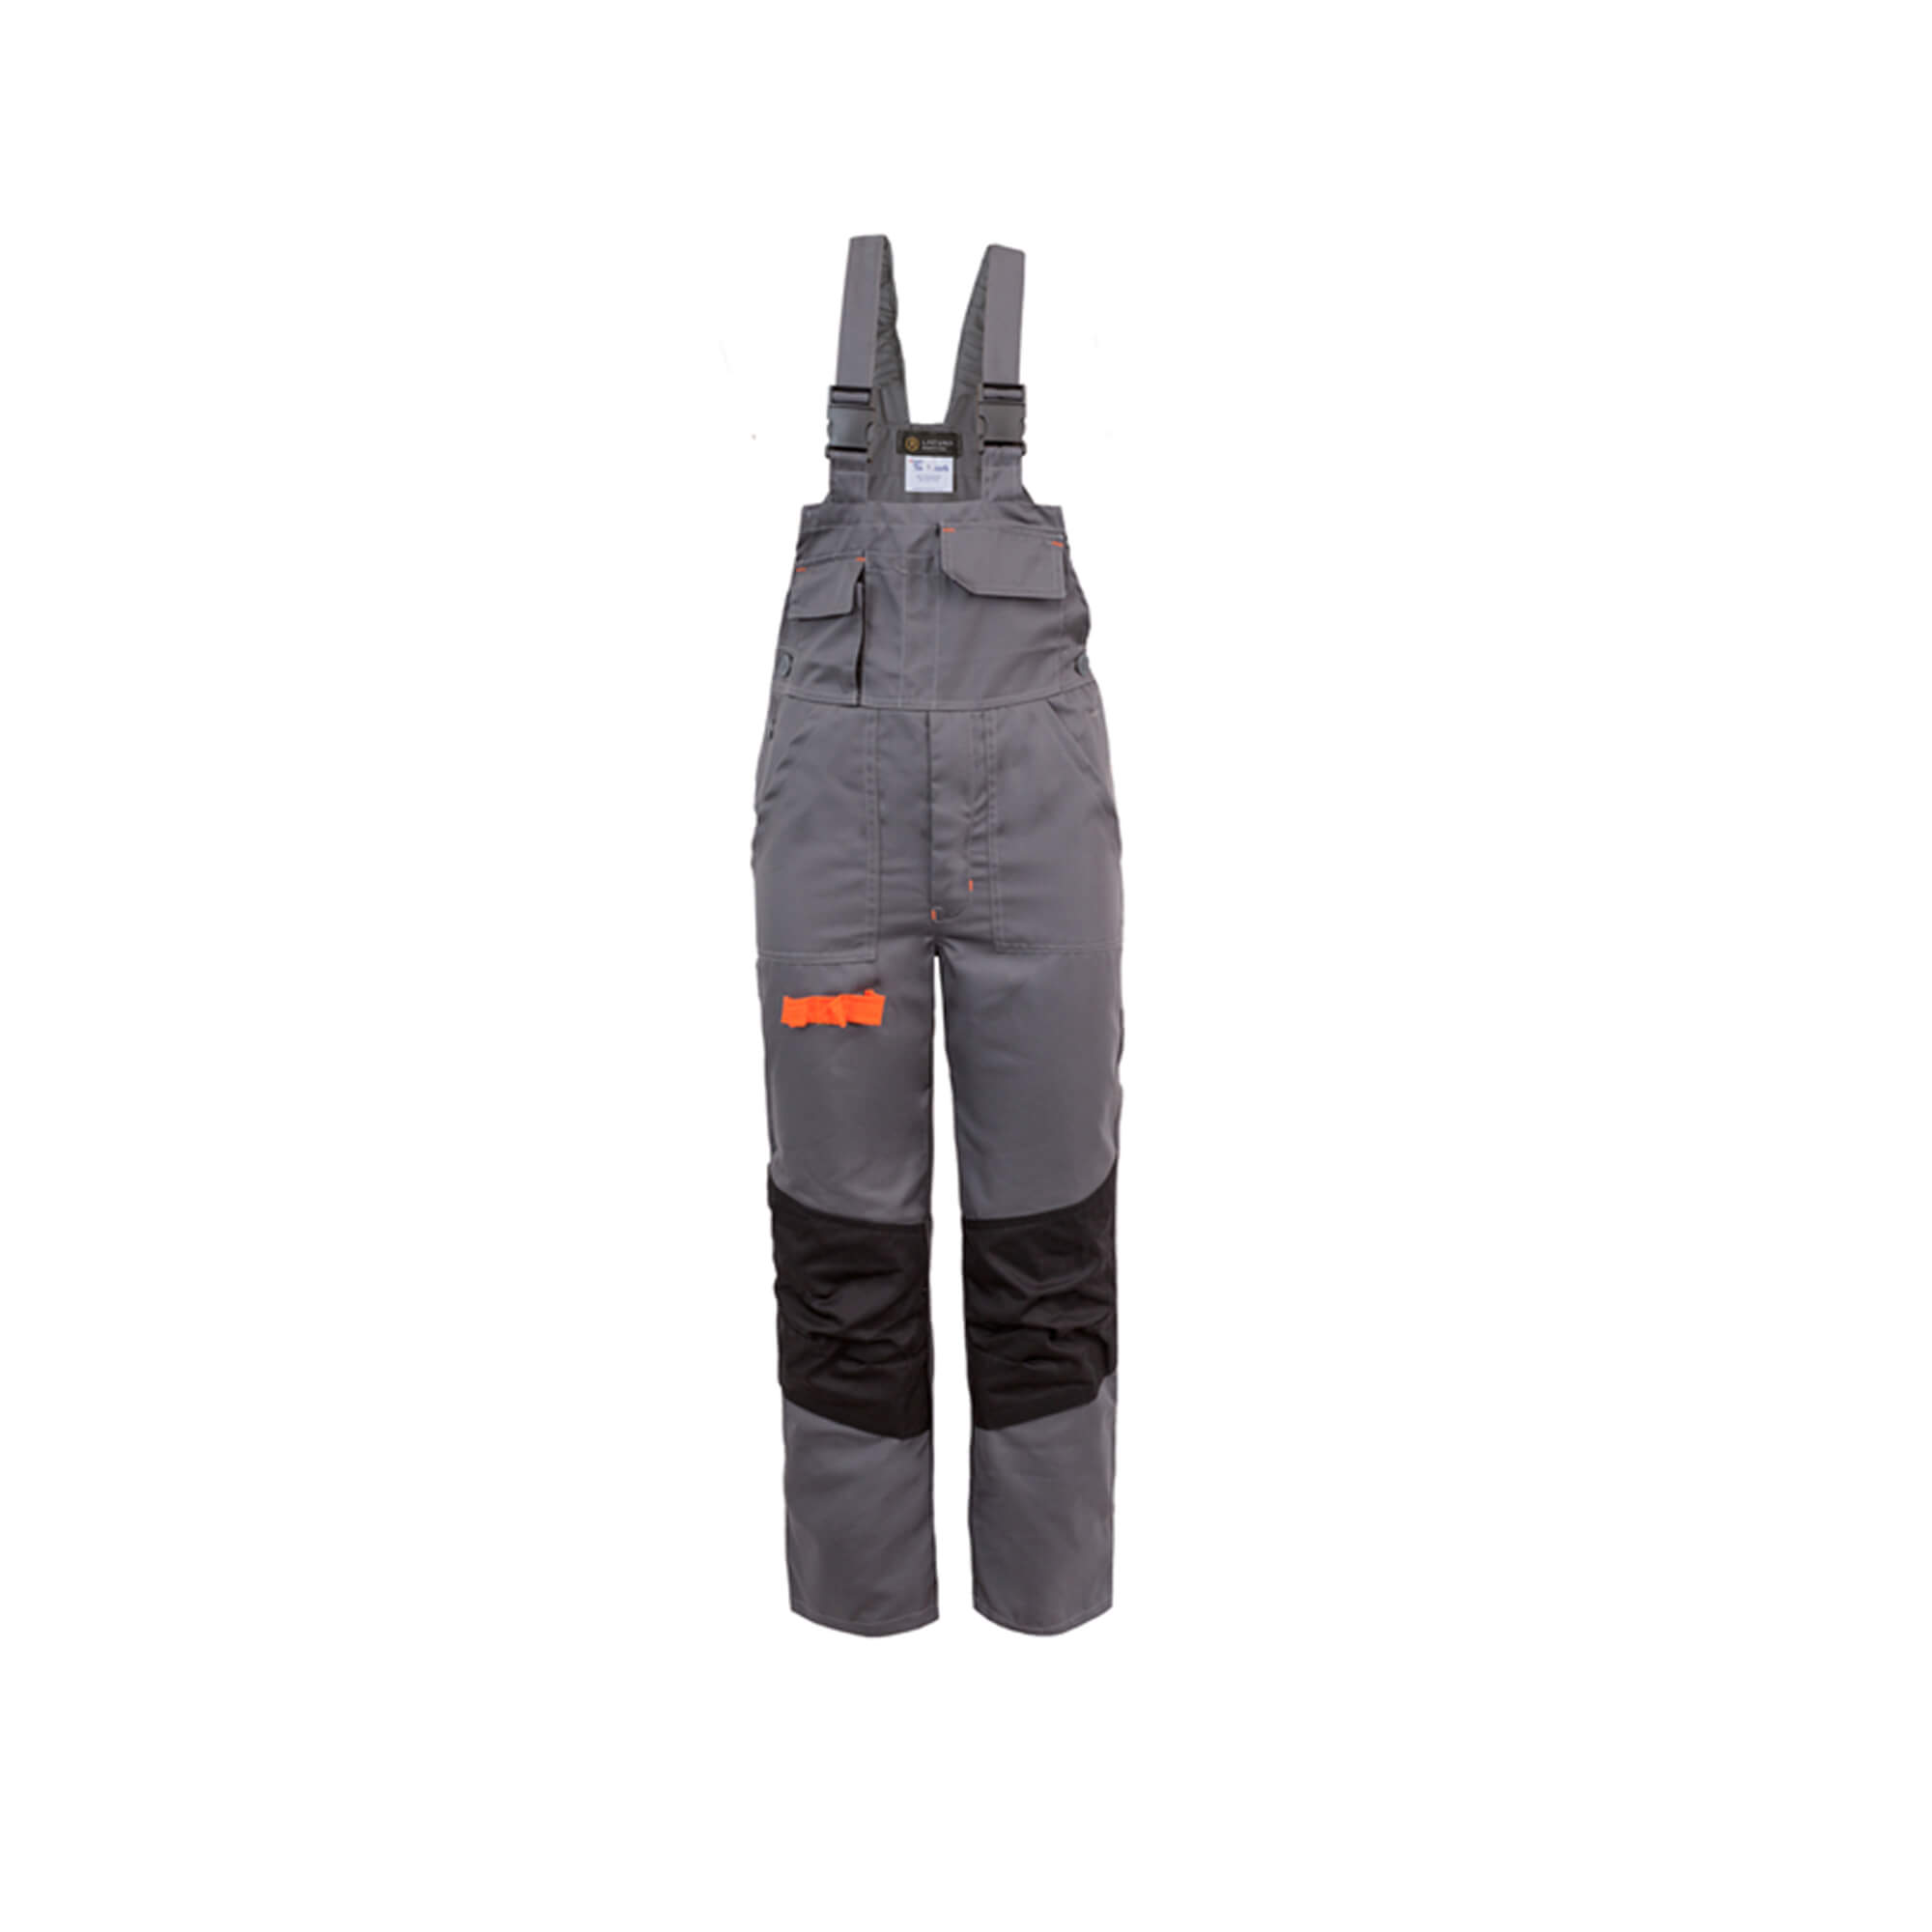 MERU 2 hi-vis safety farmer trousers